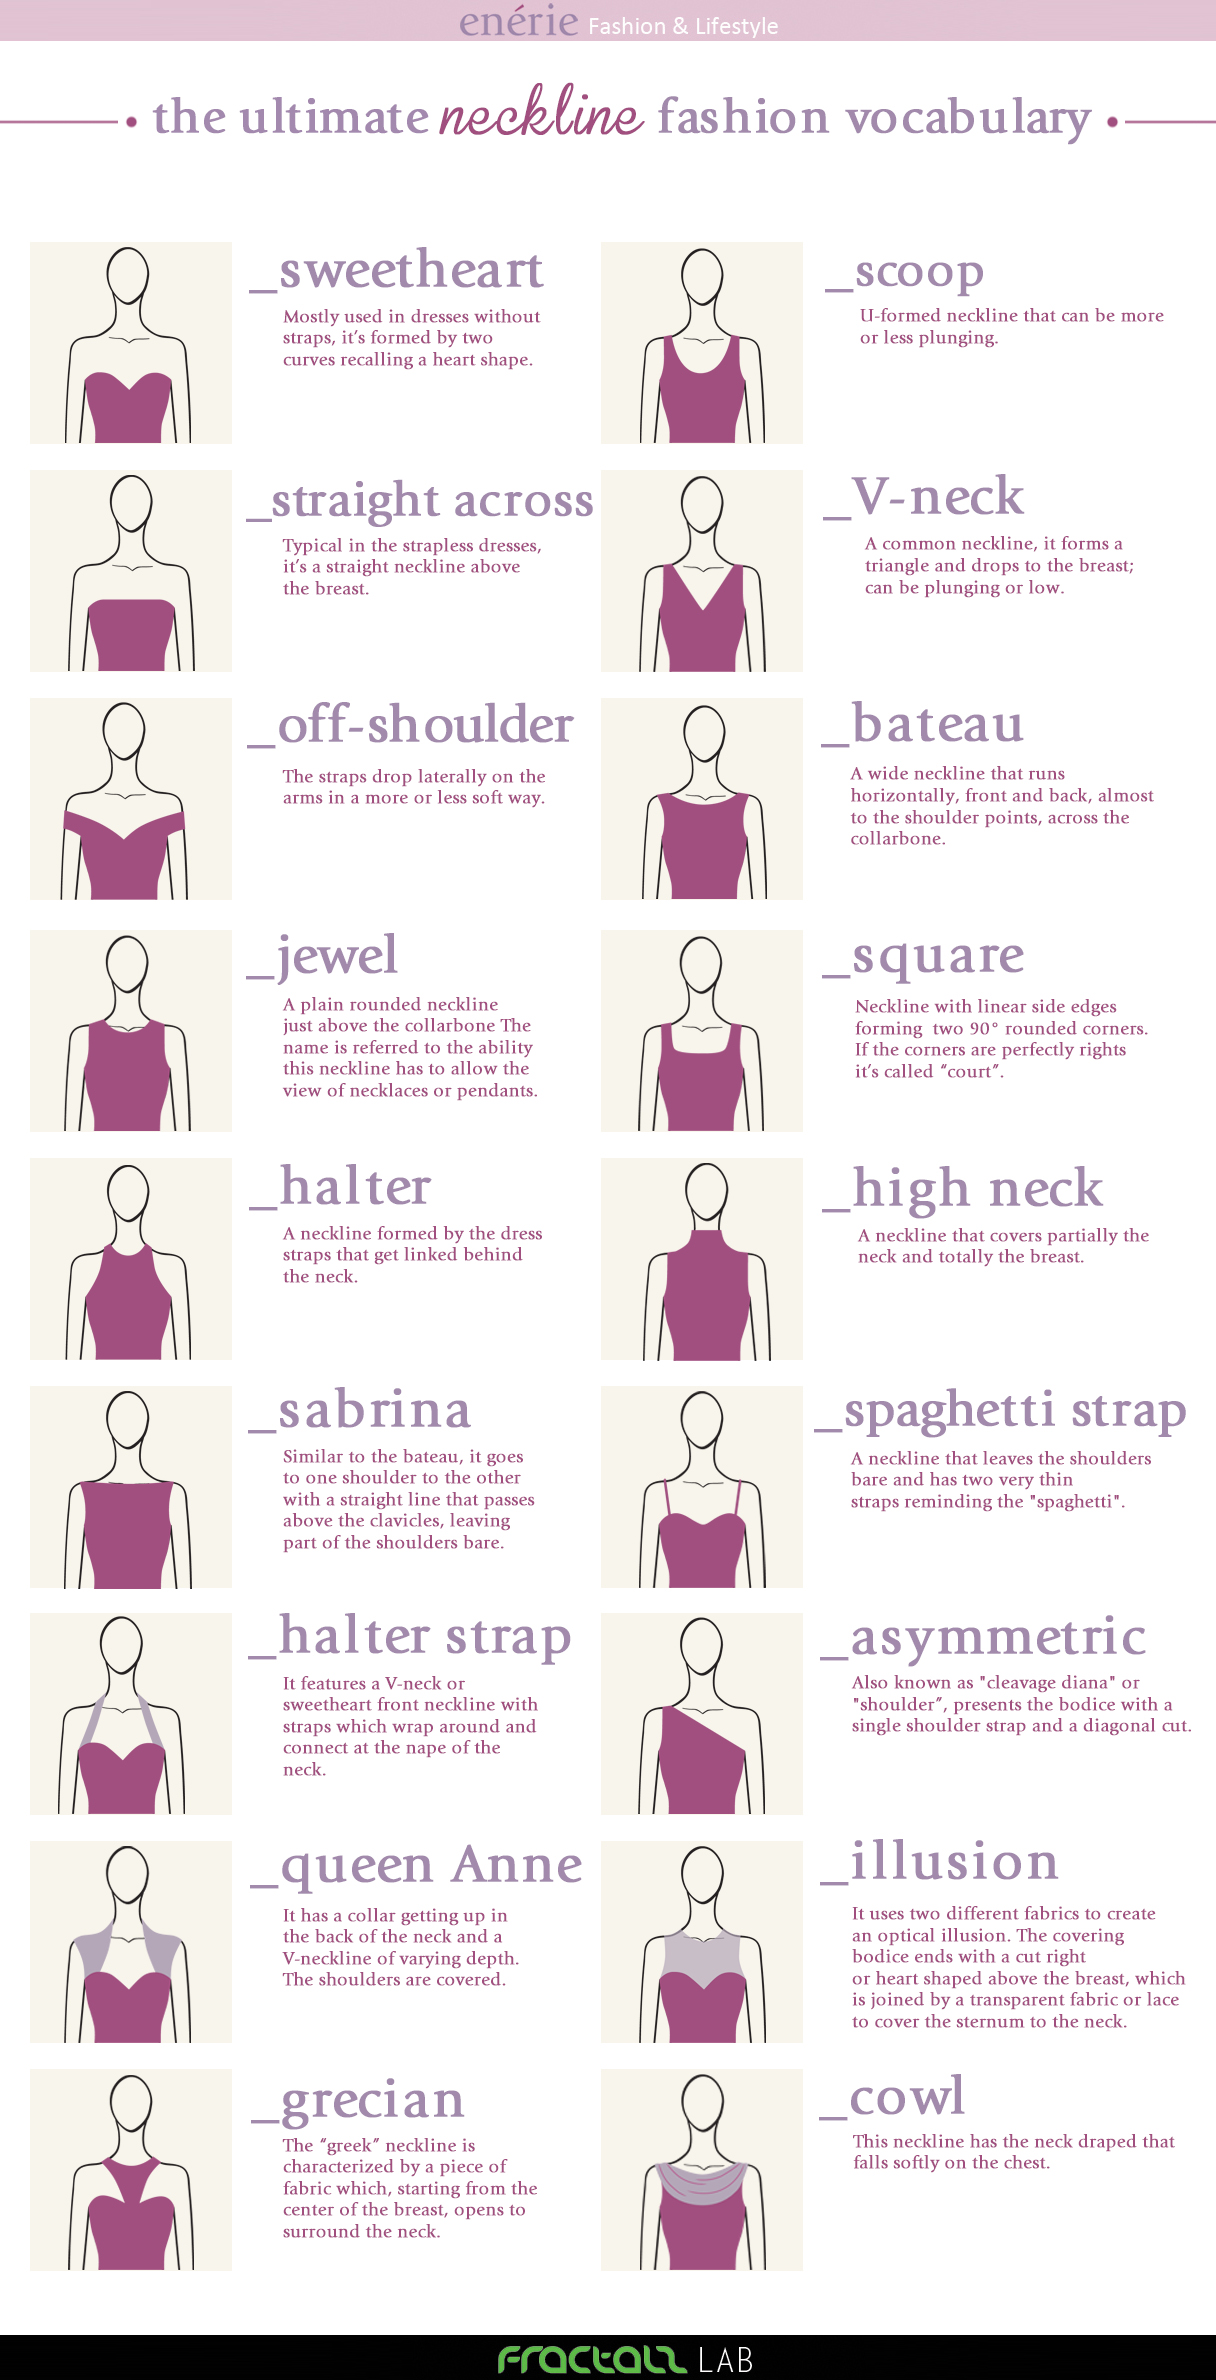 The Ultimate Neckline Fashion Vocabulary